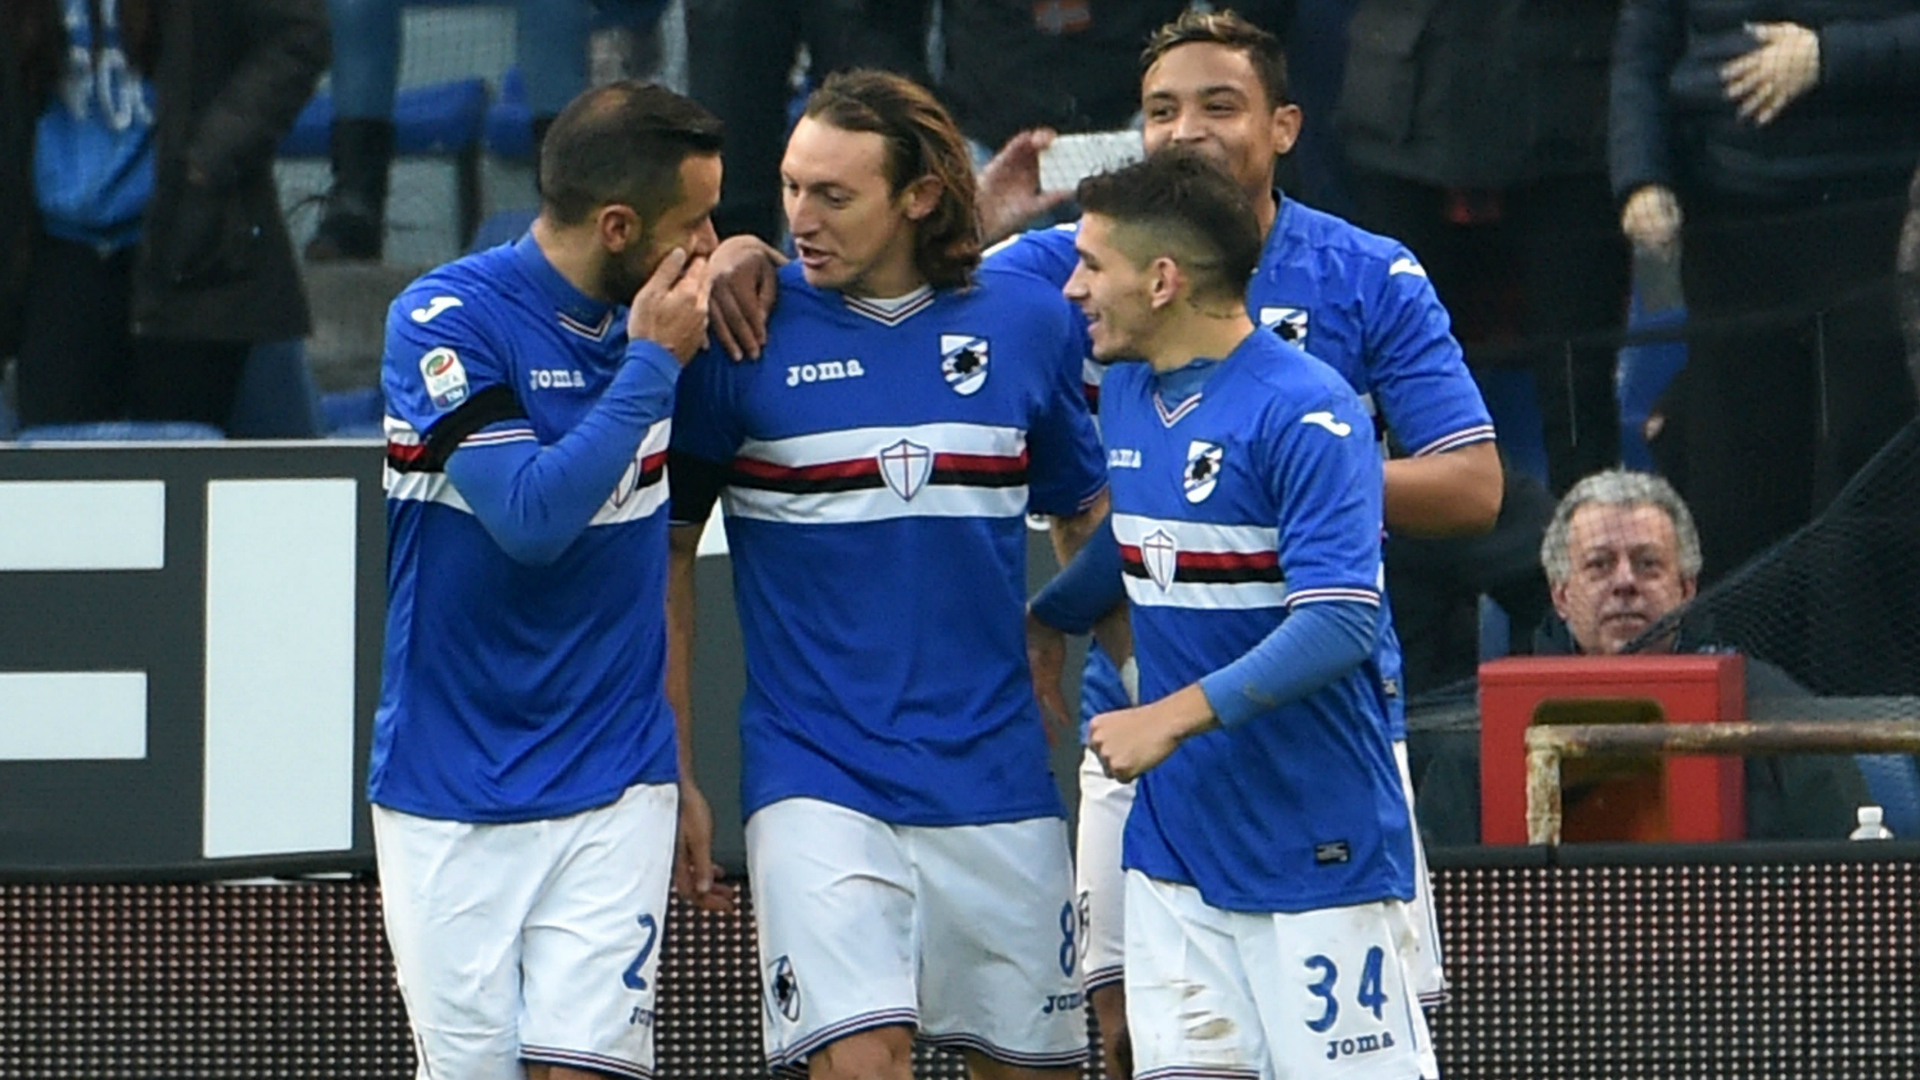 sampdoria-players-celebrating-against-torino-serie-a-04122016_1xqs5u2xgkwoy19c3b867guhdl